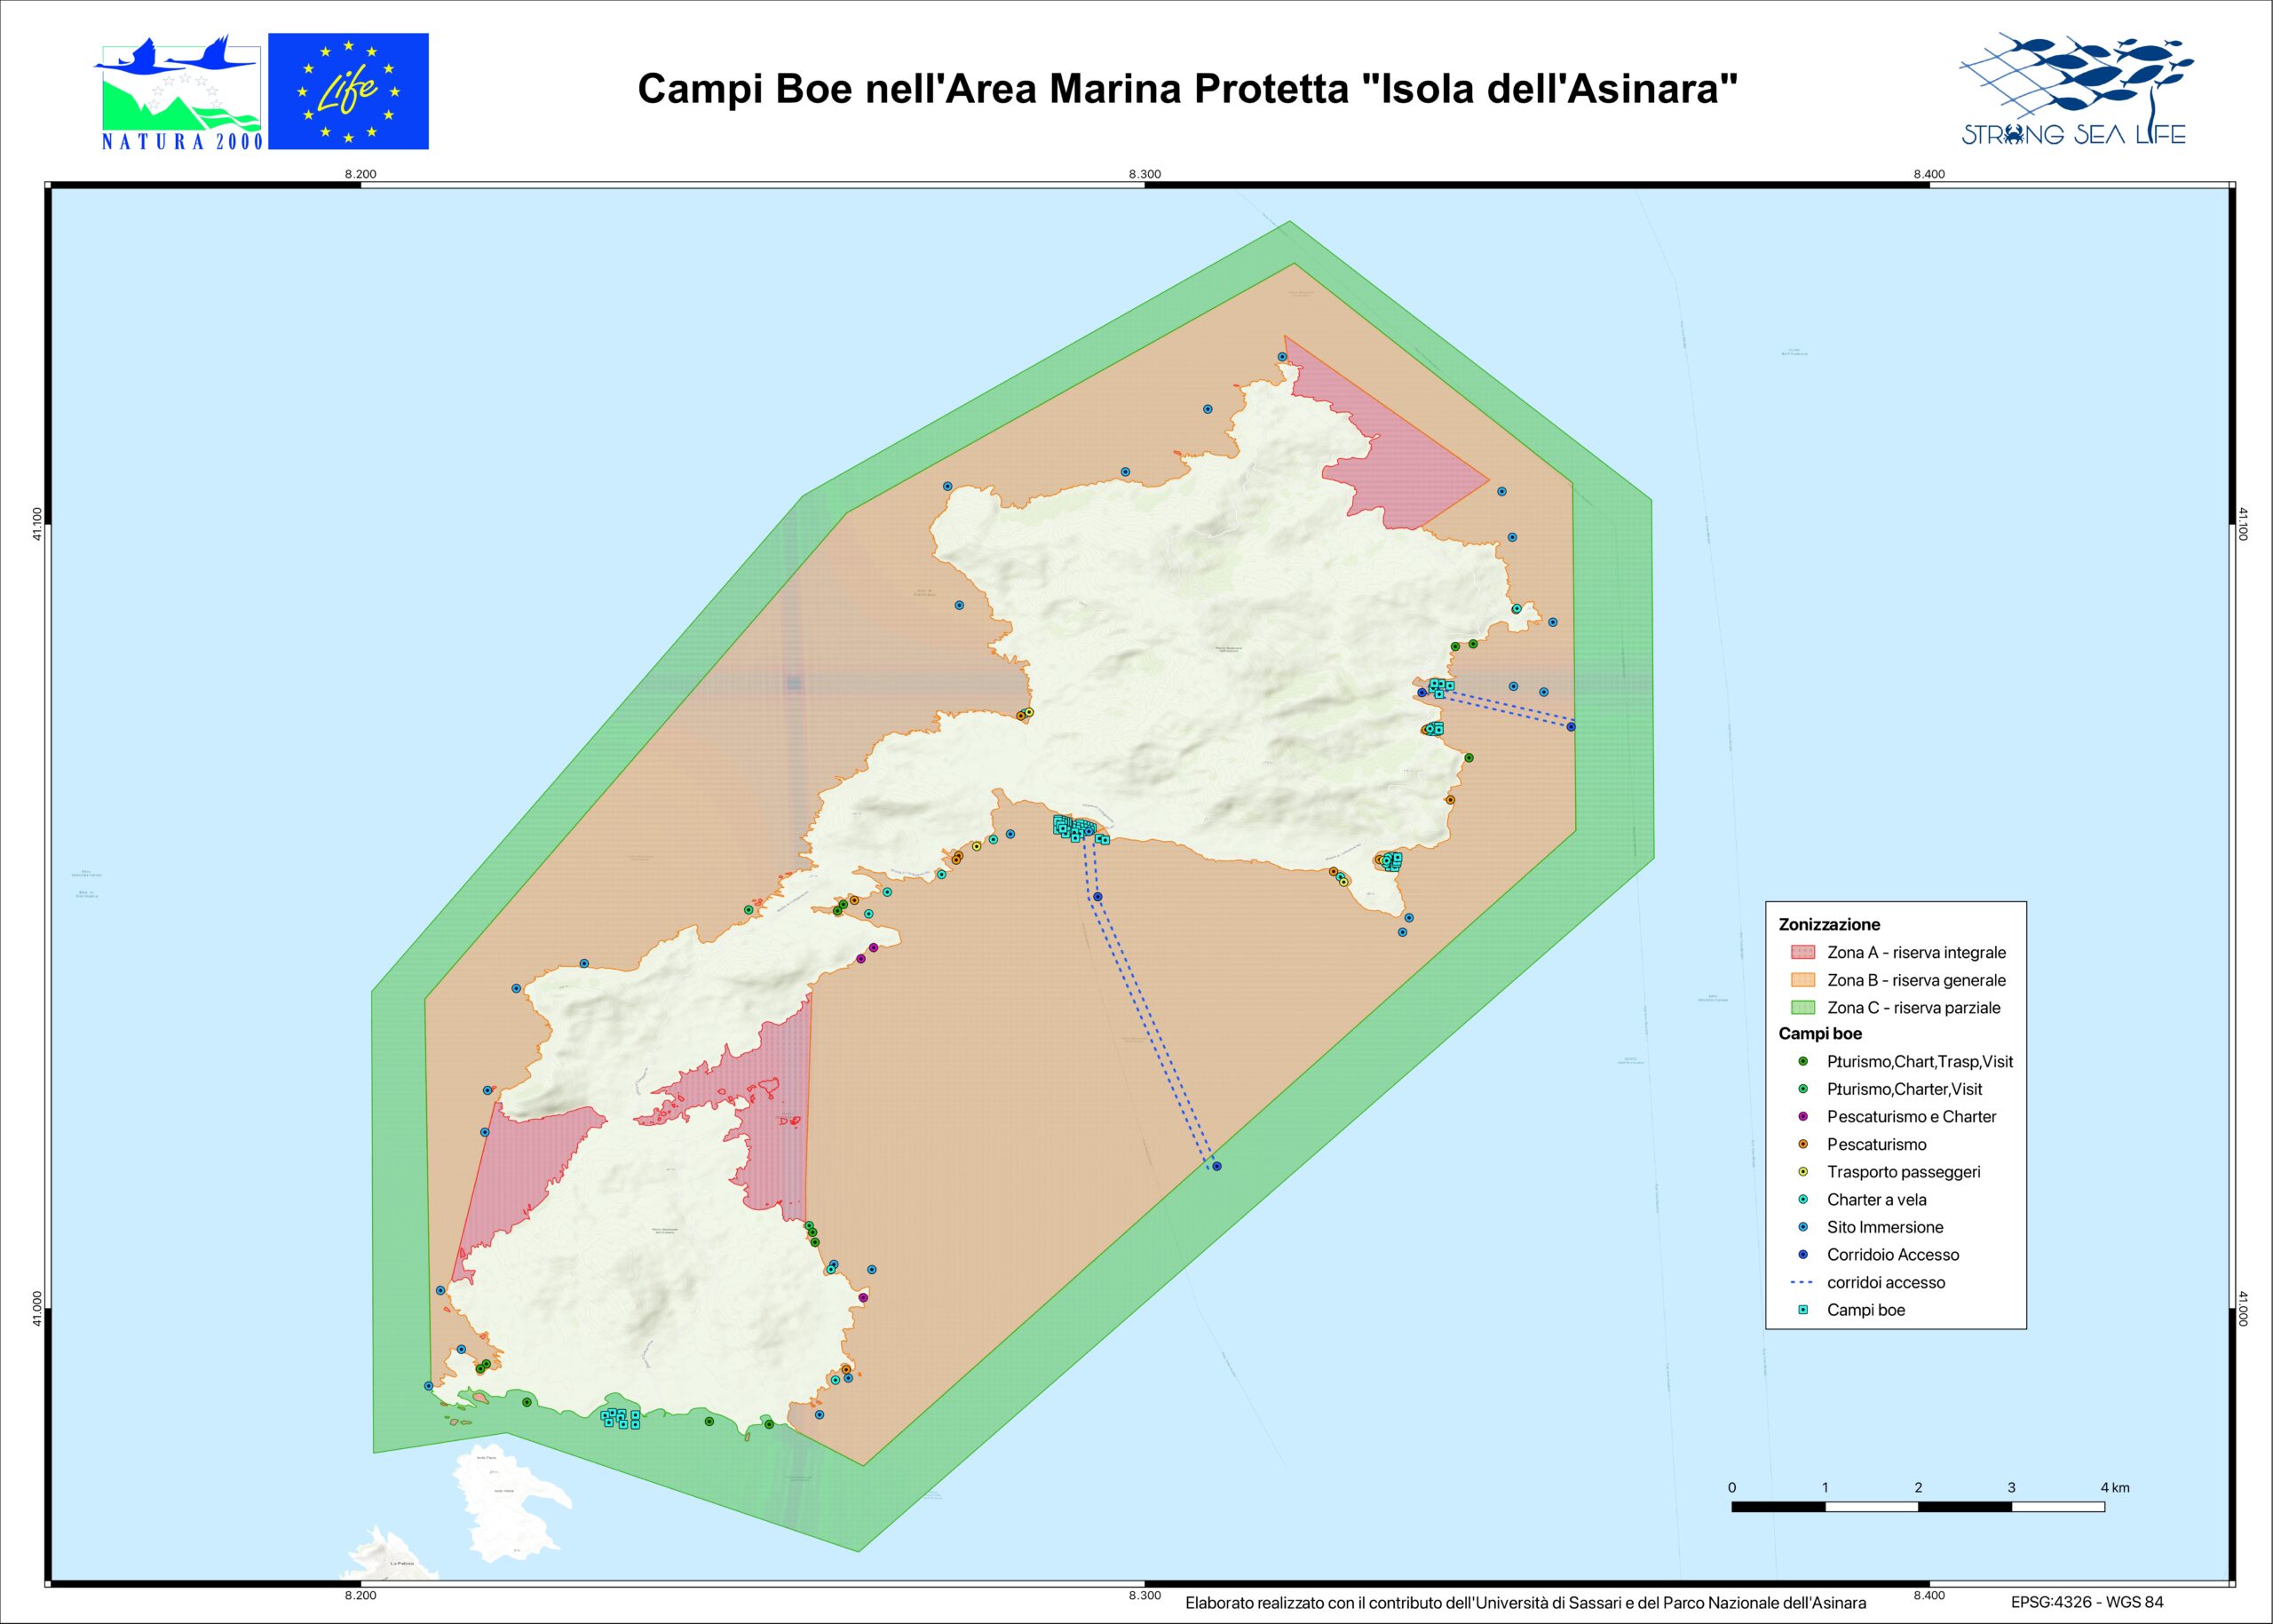 Campi Boe nell'Area Marina Protetta "Isola dell'Asinara"